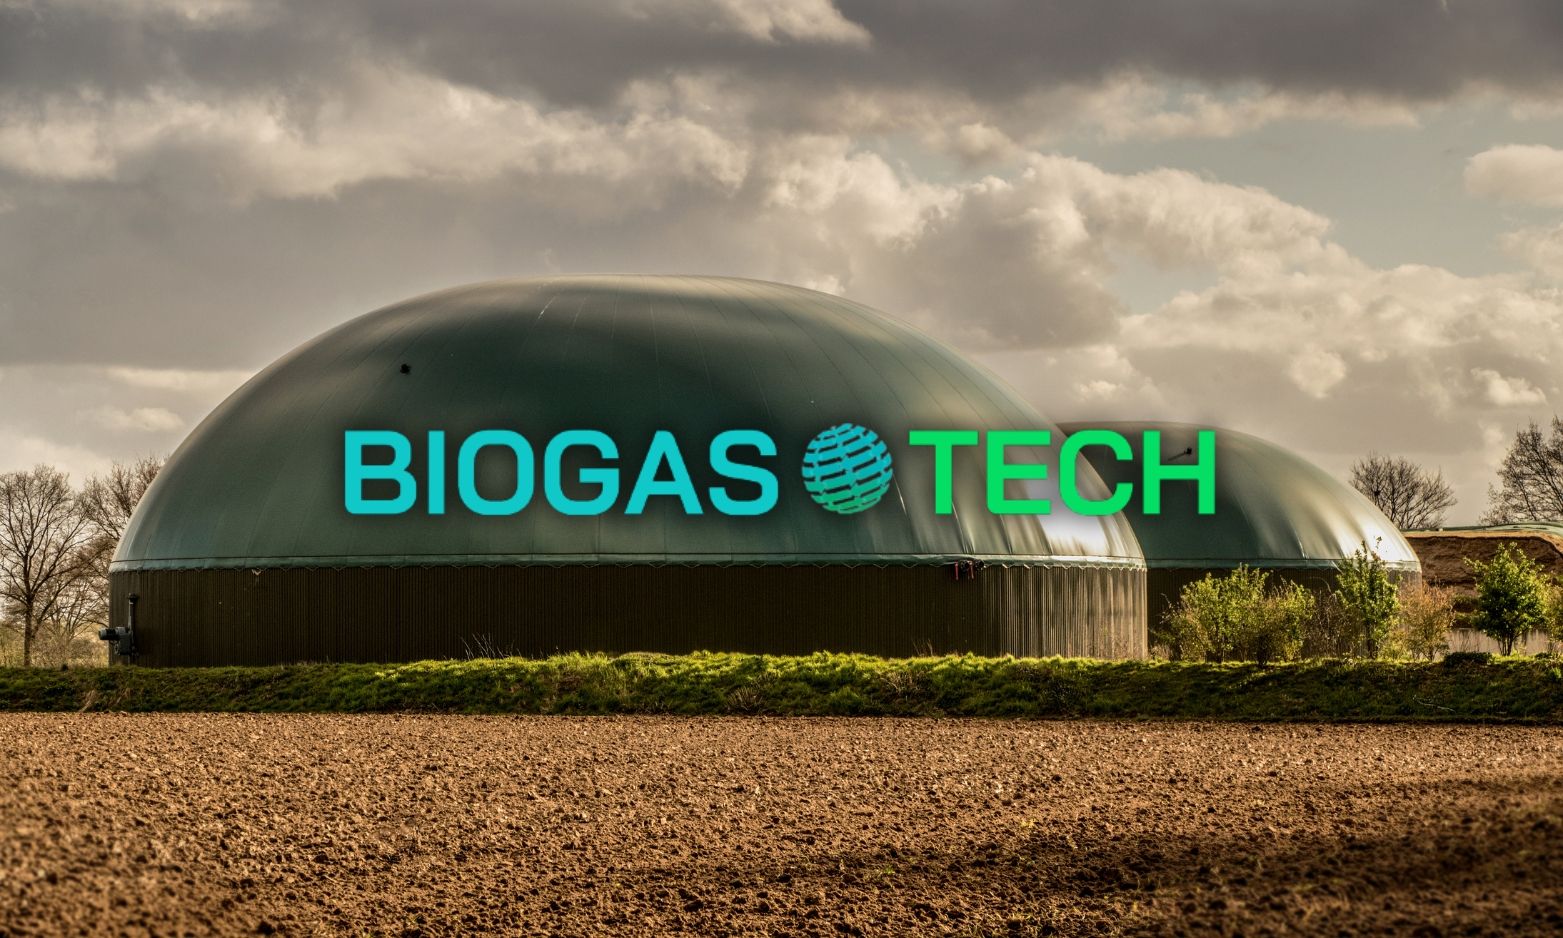 Sedigas Biogas Tech